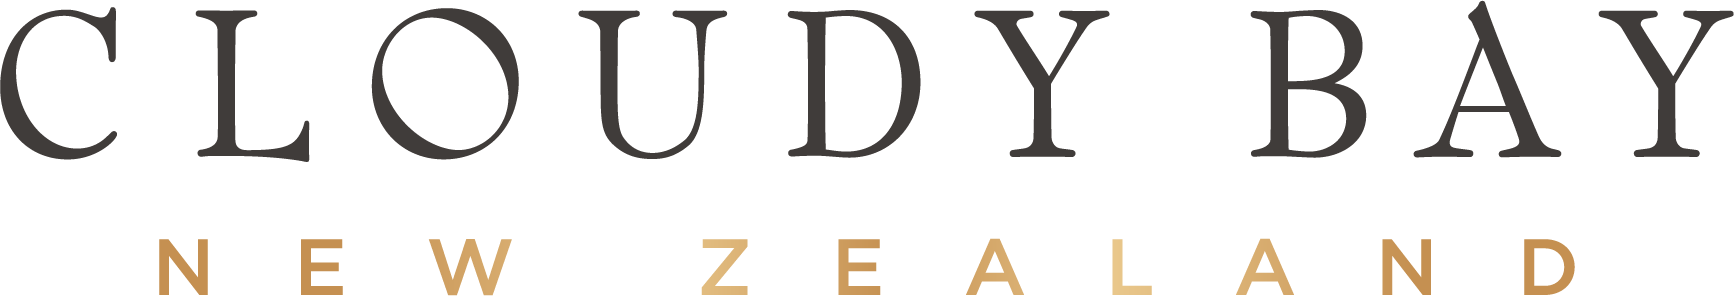 Cloudy bay logo